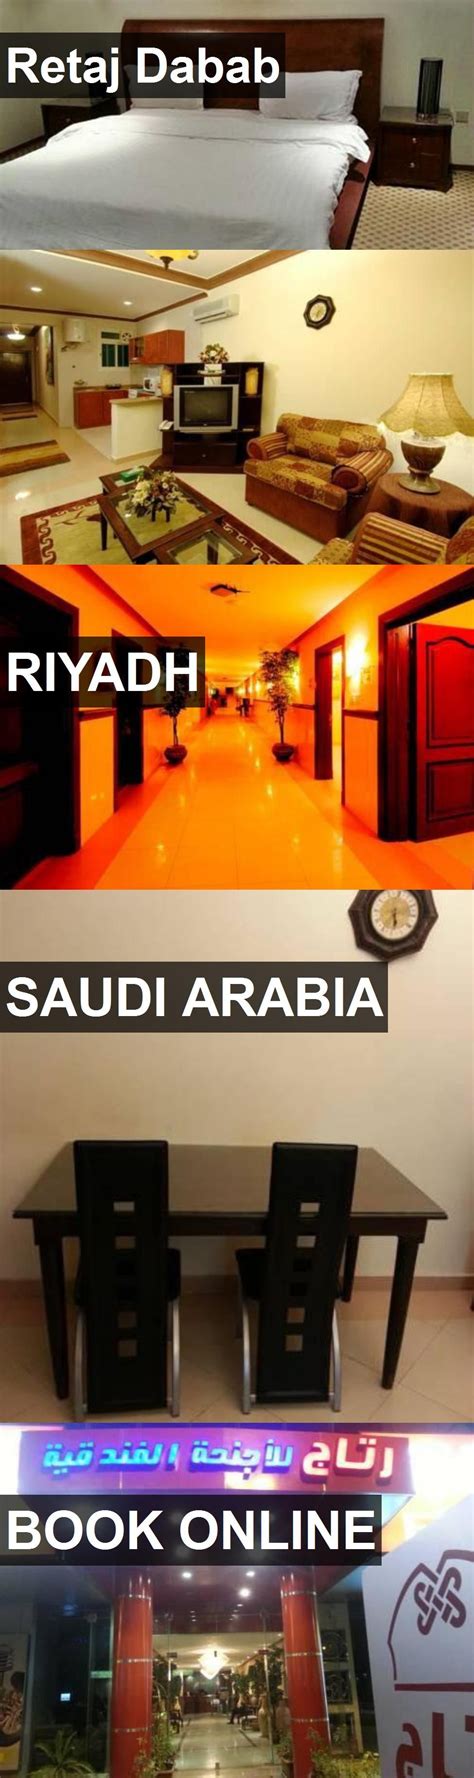 dabab price in saudi arabia